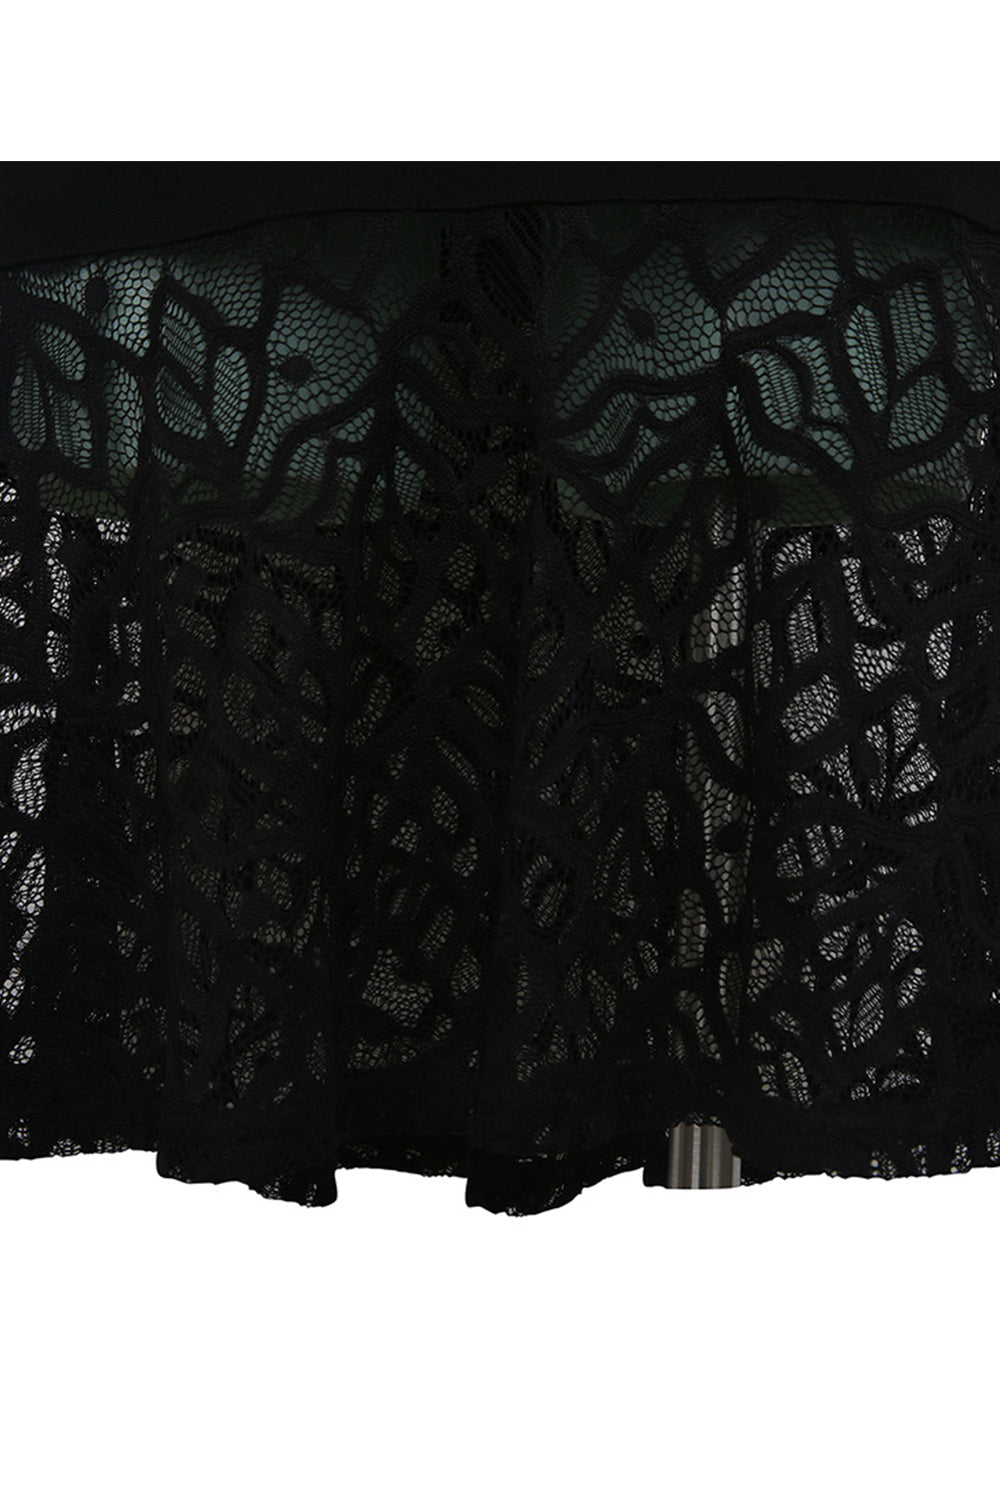 Ketty More Women Sleeveless Lace Decorated Mermaid Style Dress Black-KMWD007